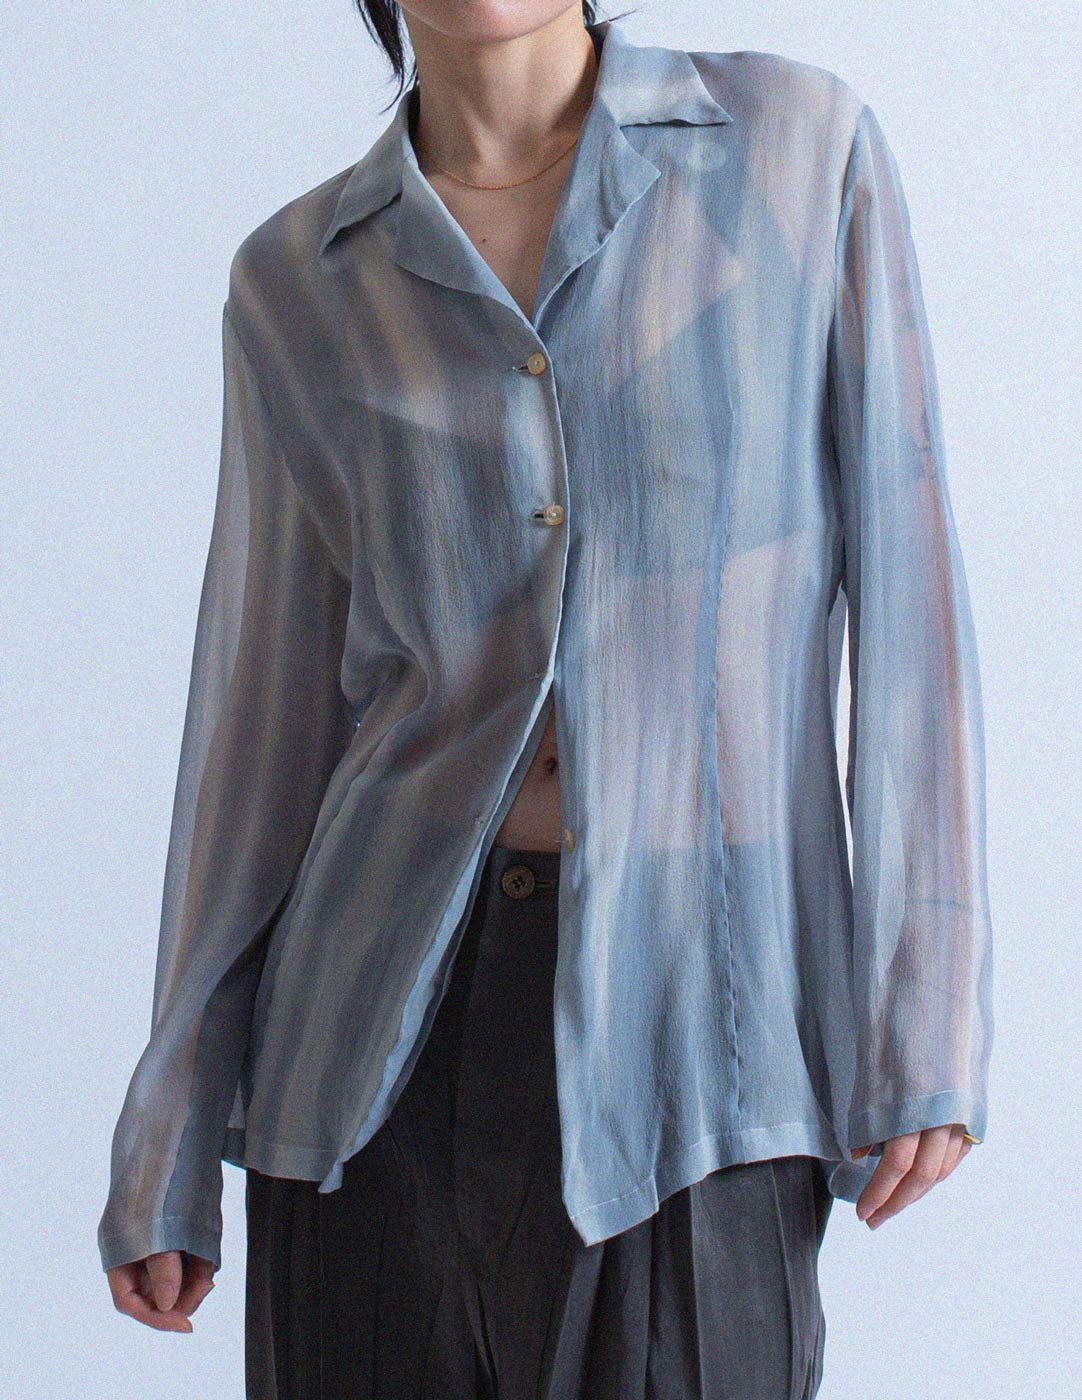 Gianfranco Ferré vintage sheer blue silk shirt front detail